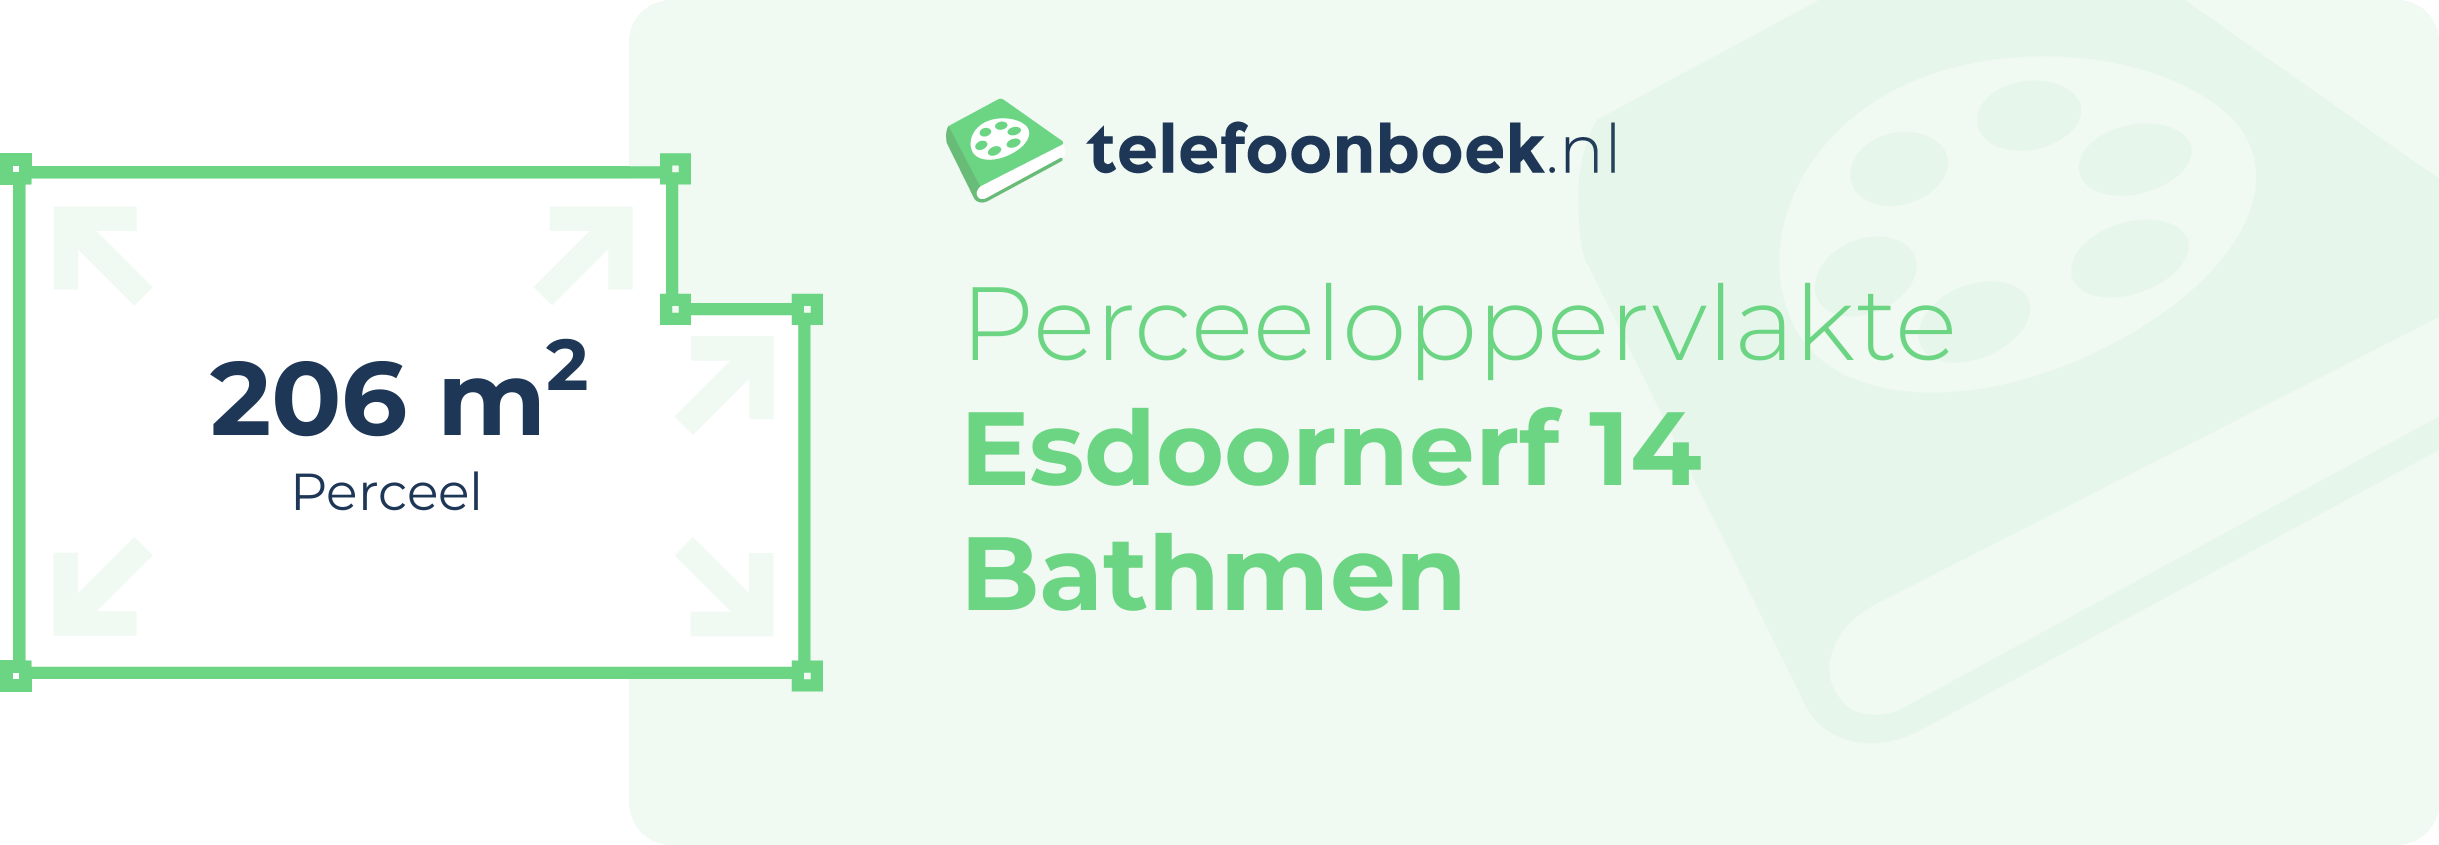 Perceeloppervlakte Esdoornerf 14 Bathmen